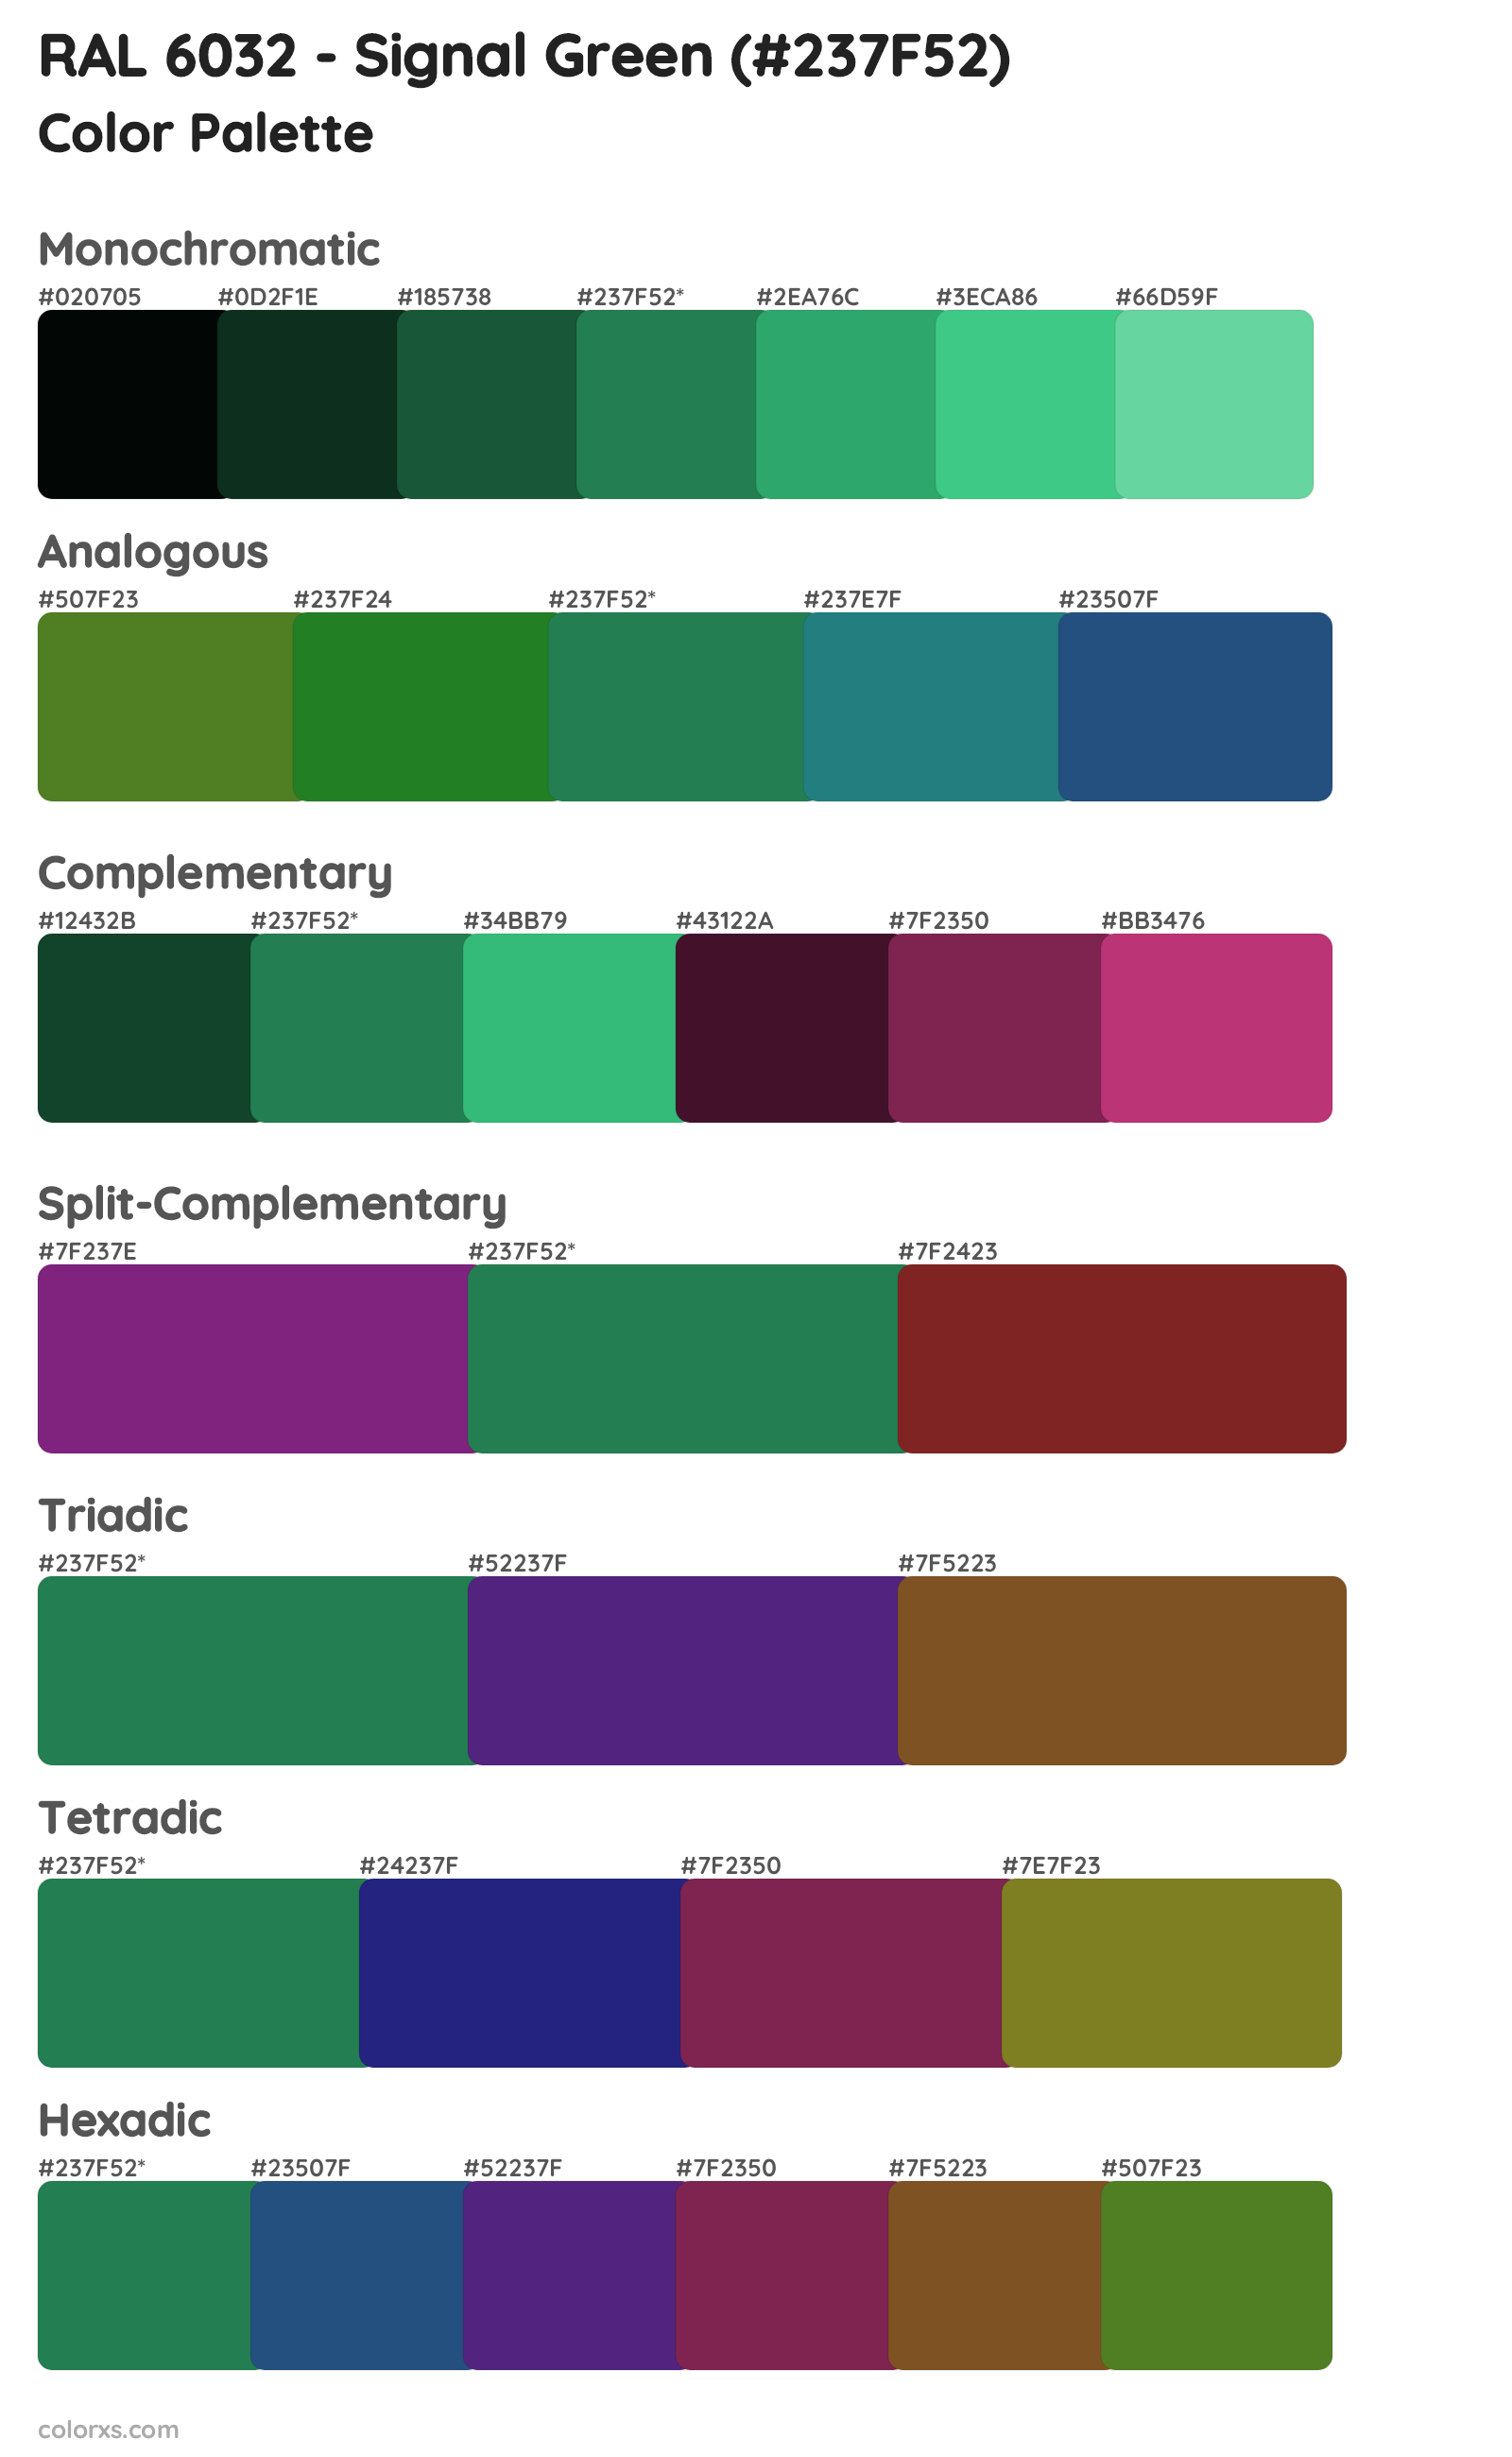 RAL 6032 - Signal Green Color Scheme Palettes